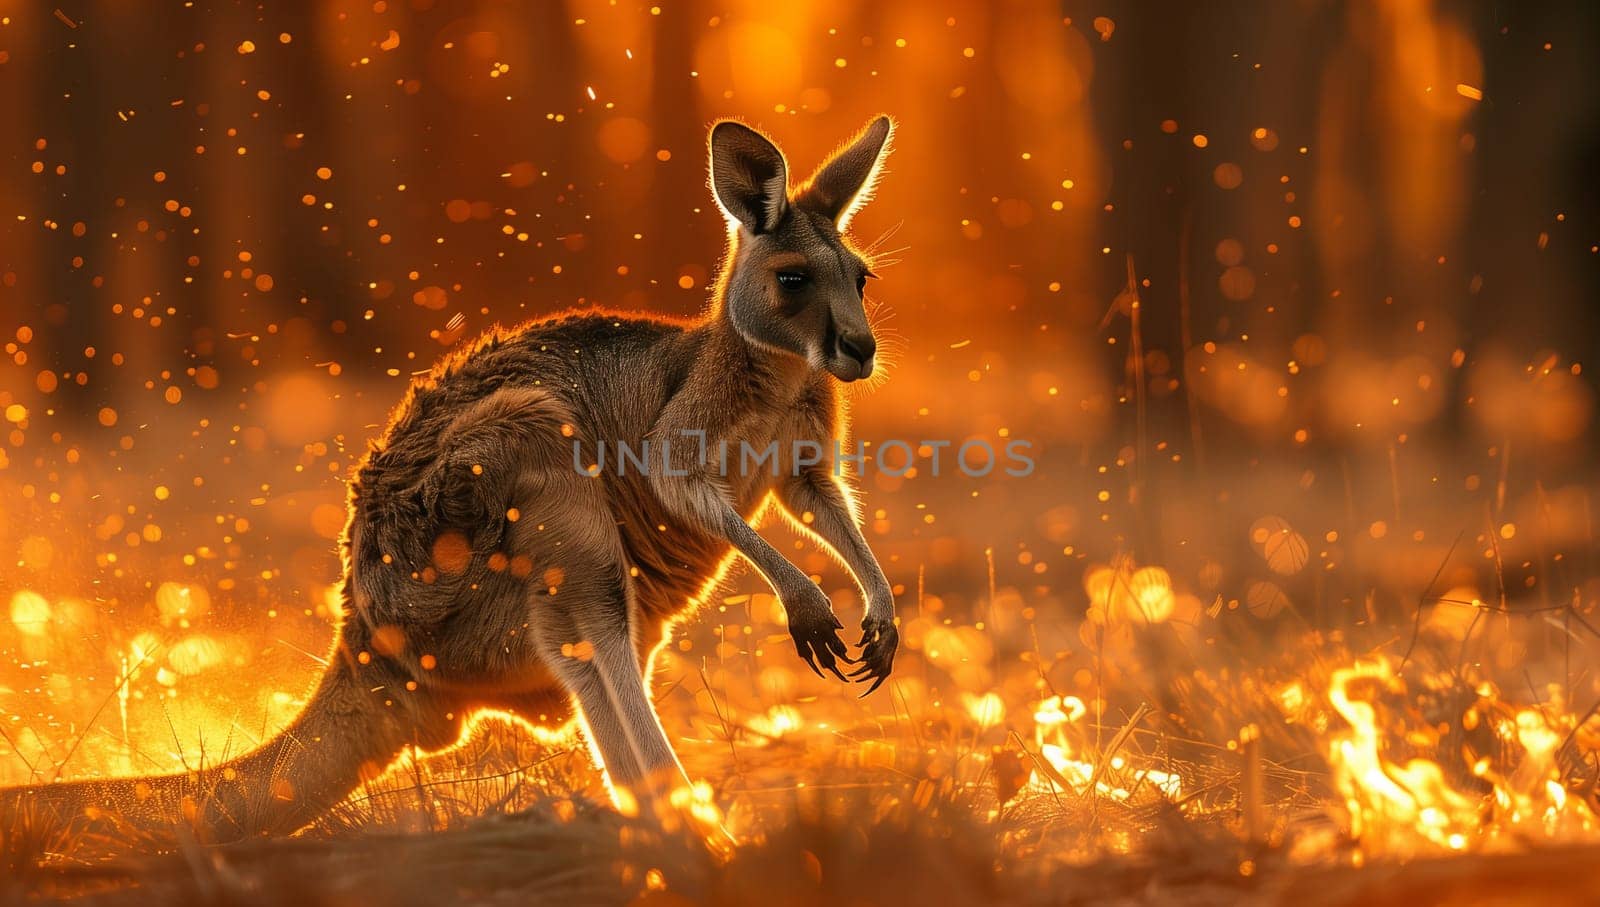 A marsupial kangaroo is bounding through a fiery field by richwolf